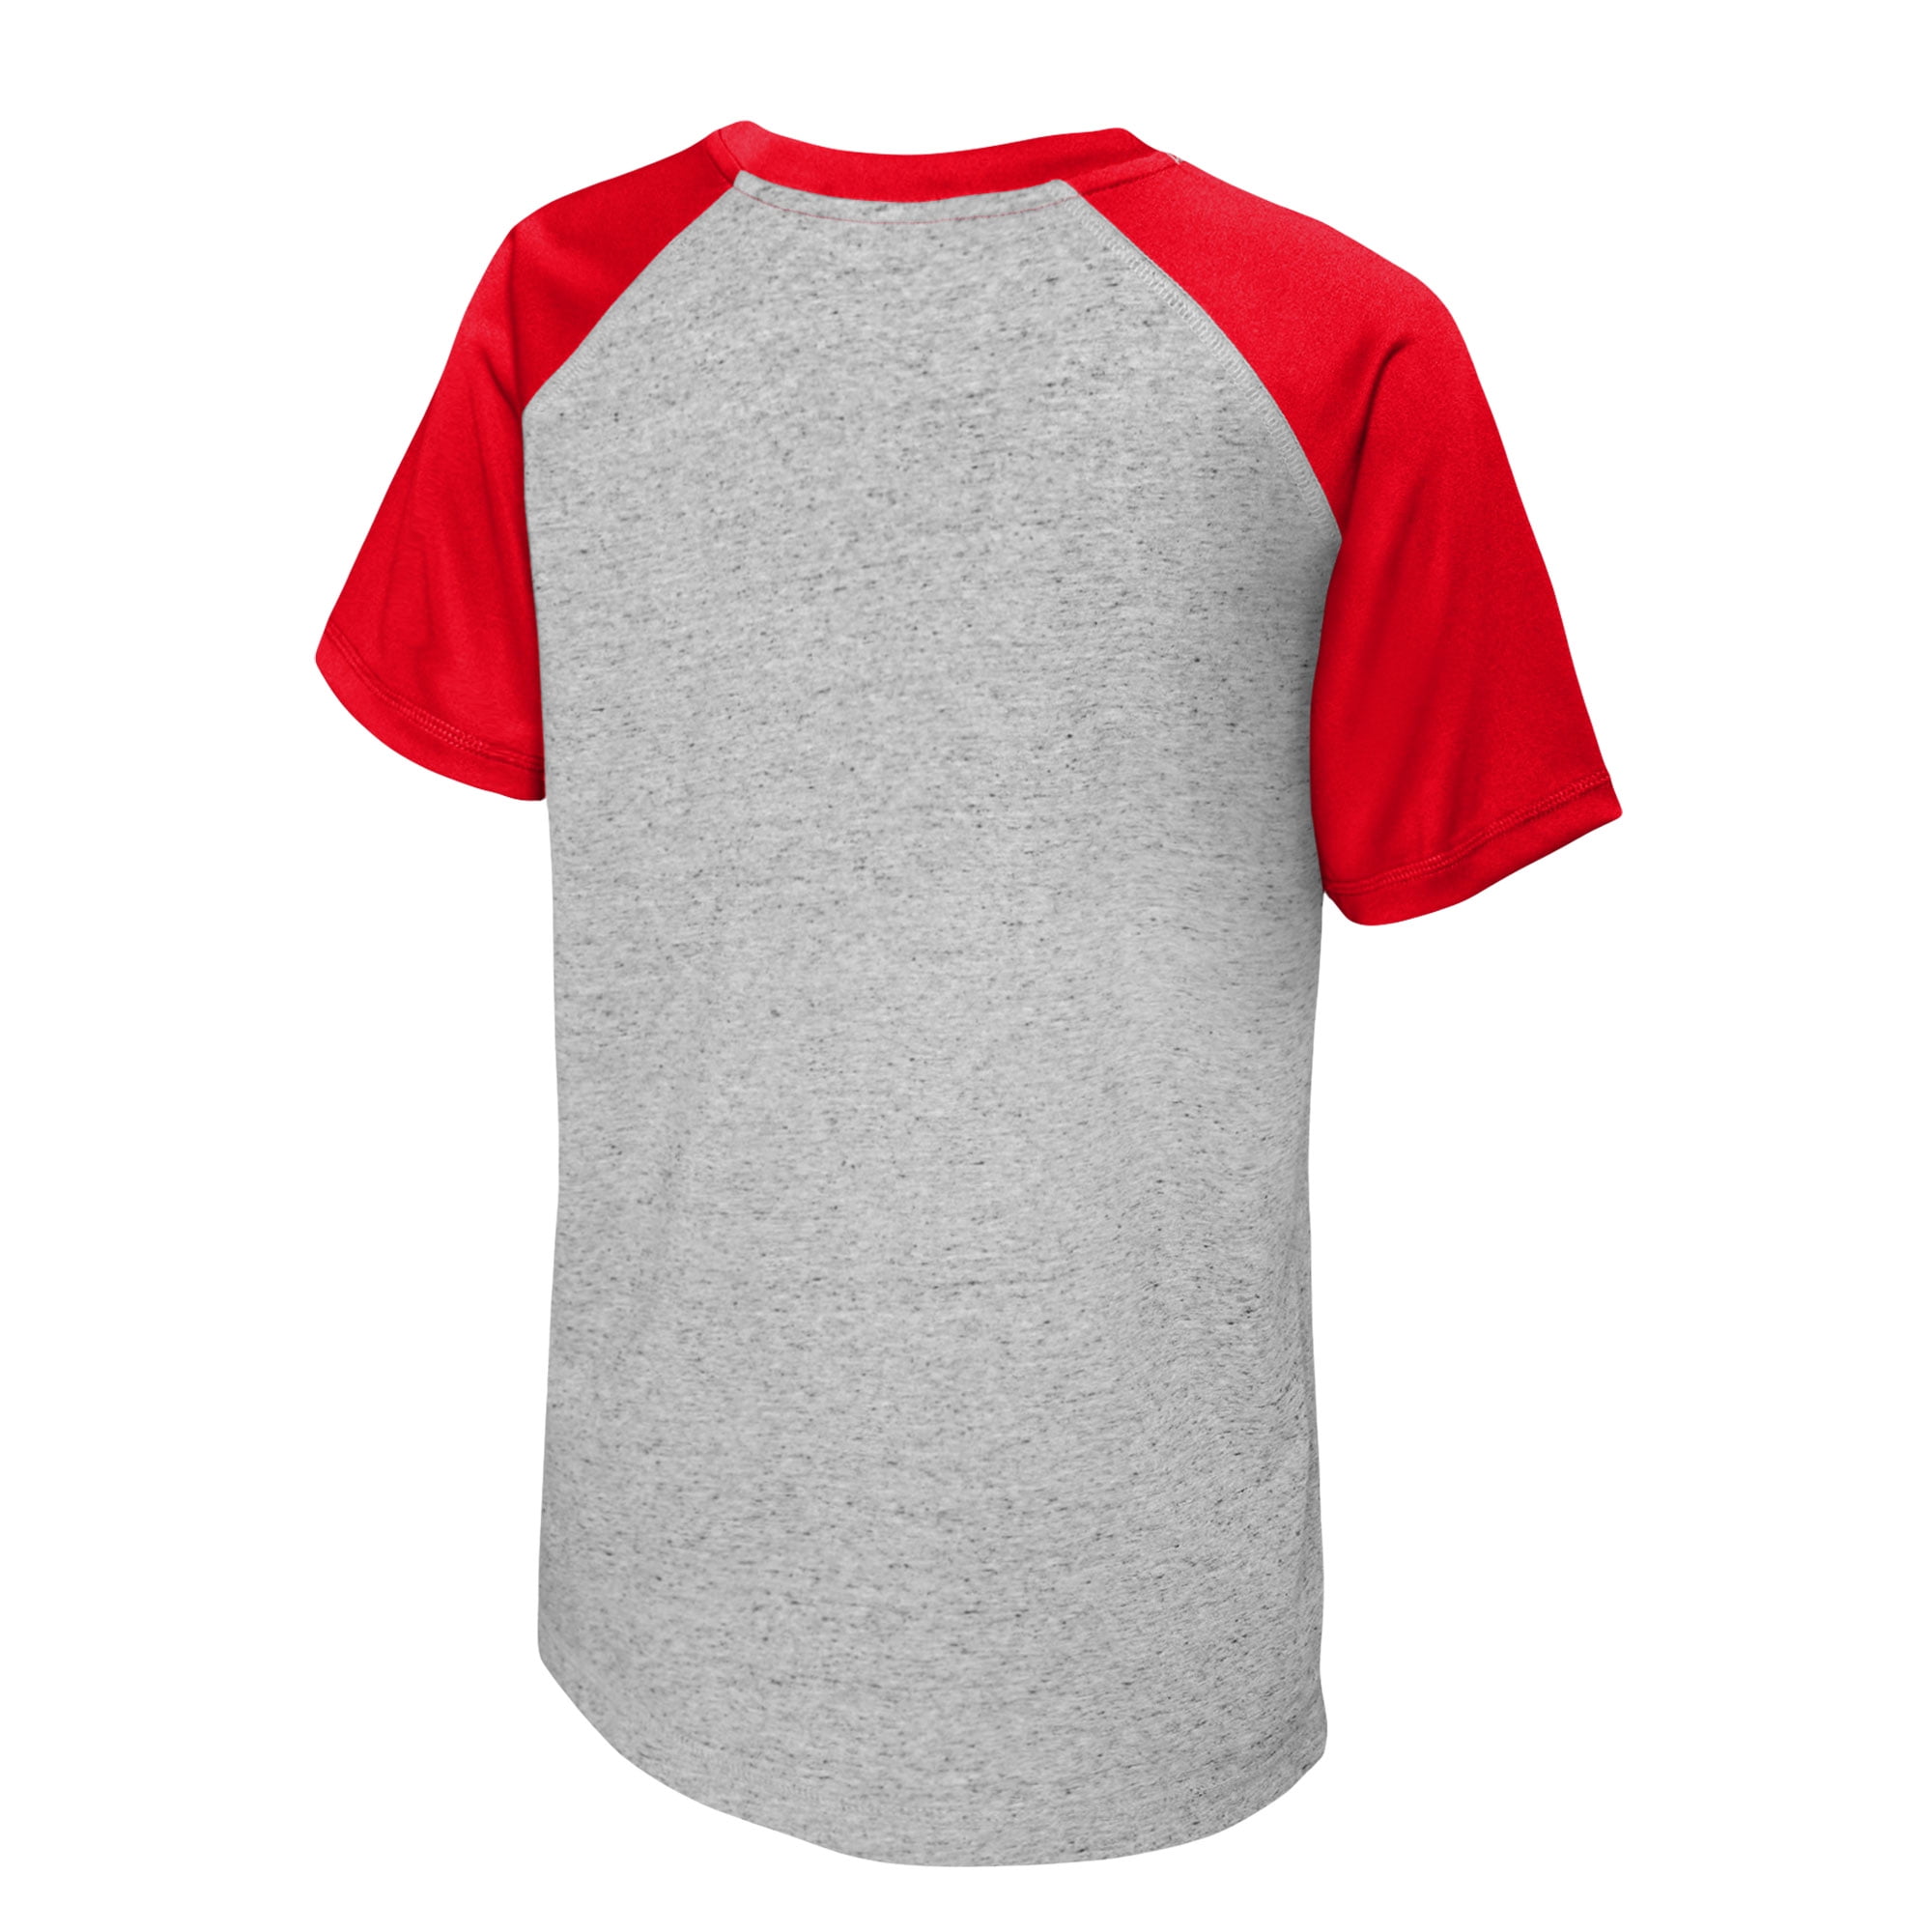 MLB St Louis Cardinals Gear for Sports T-Shirt LG Red Grandma of Groom 09  New